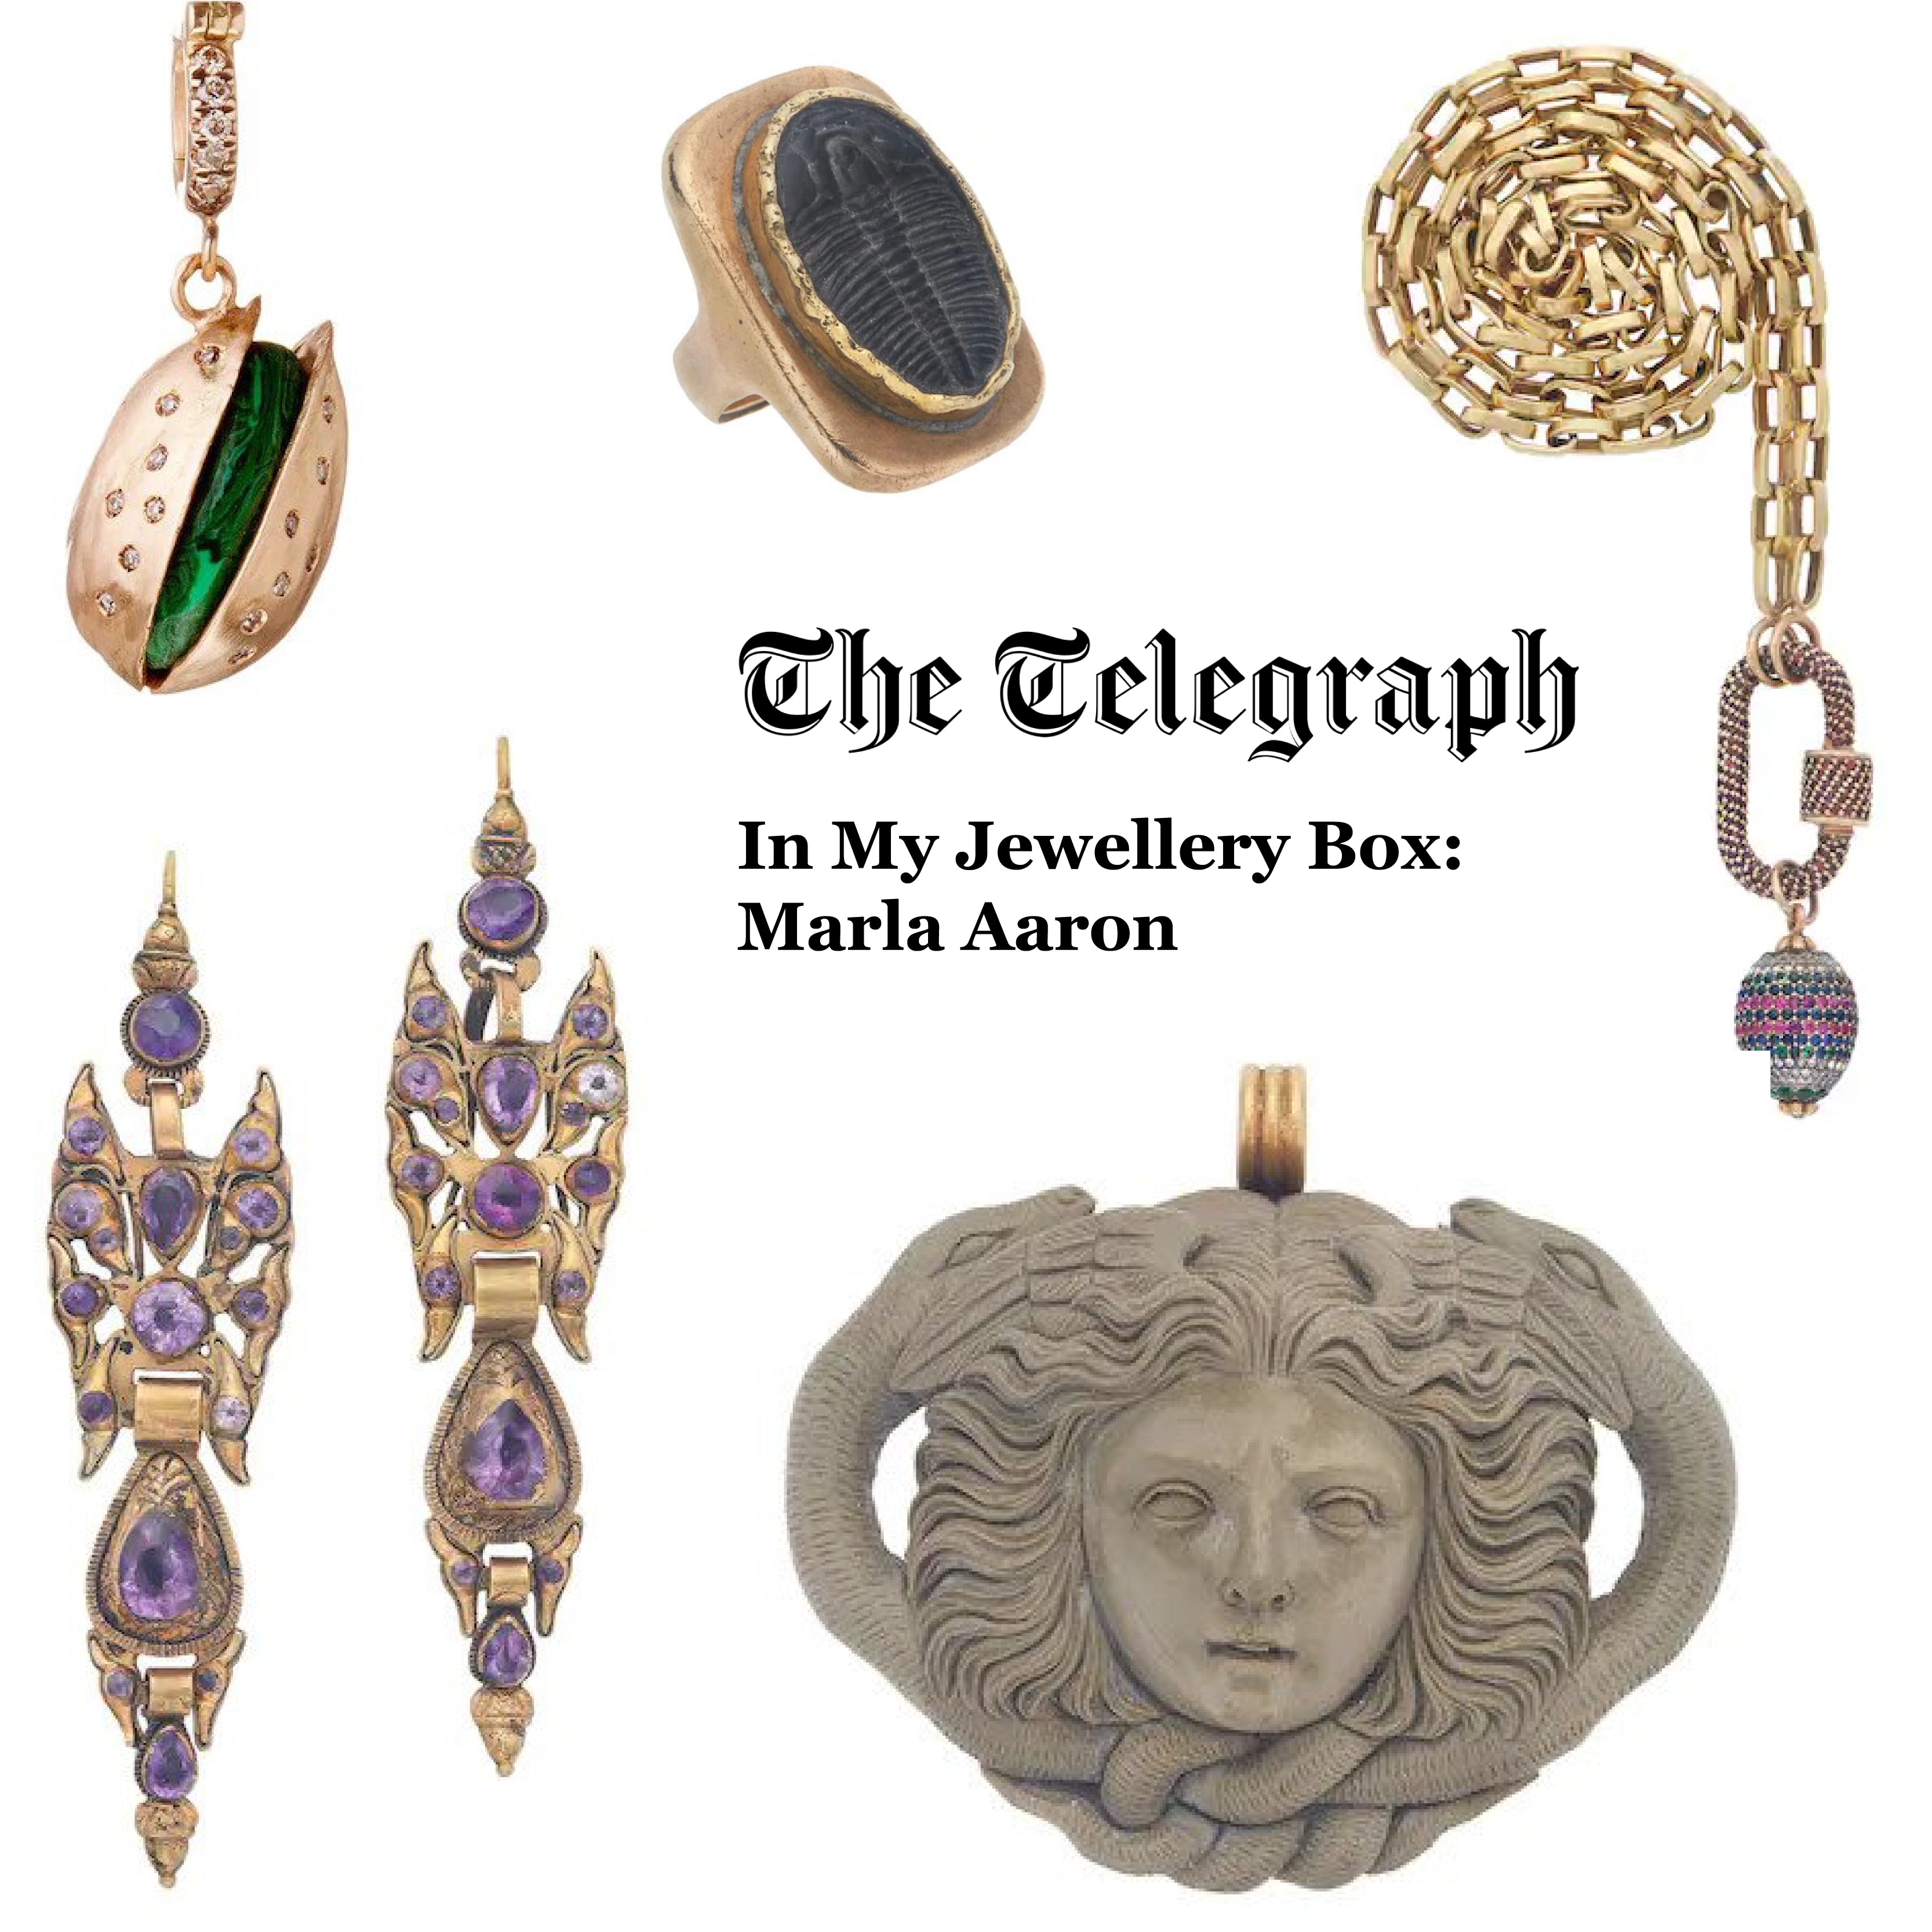 Telegraph: In My Jewelry Box